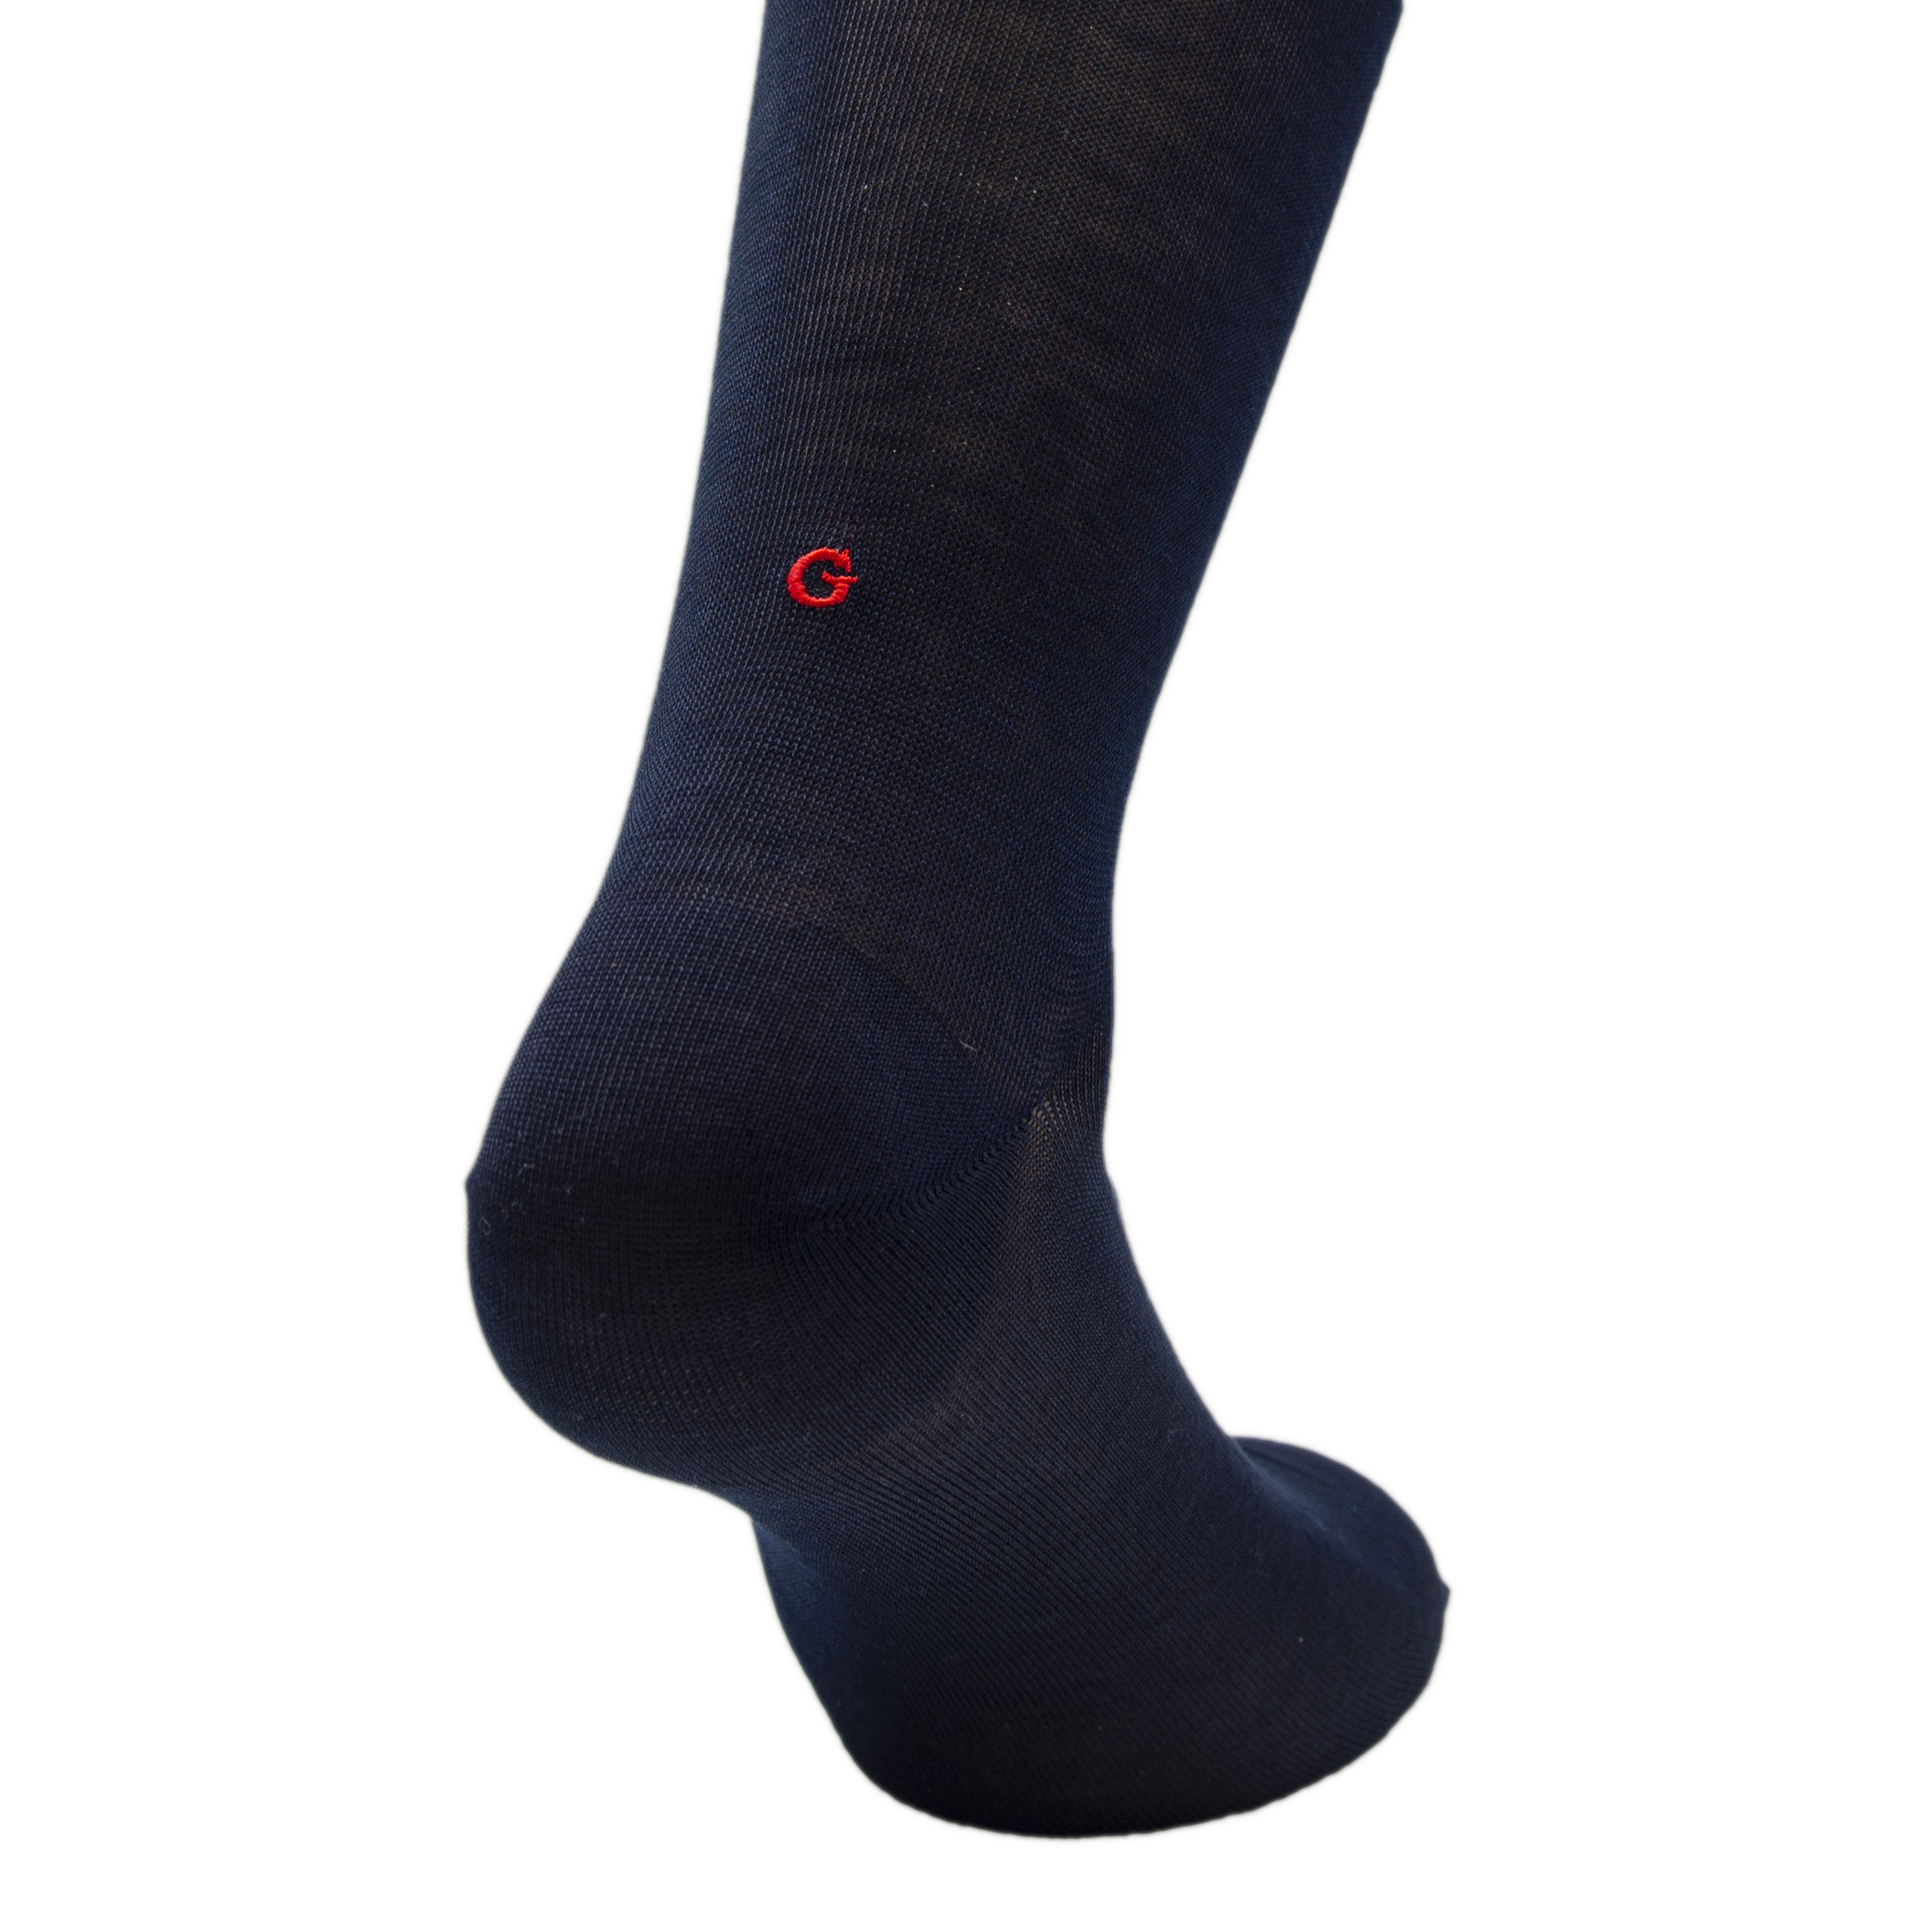 Blue Men's Socks with Red Initials - Filo di scozia Super light Stretch - Size 40/45 - 150